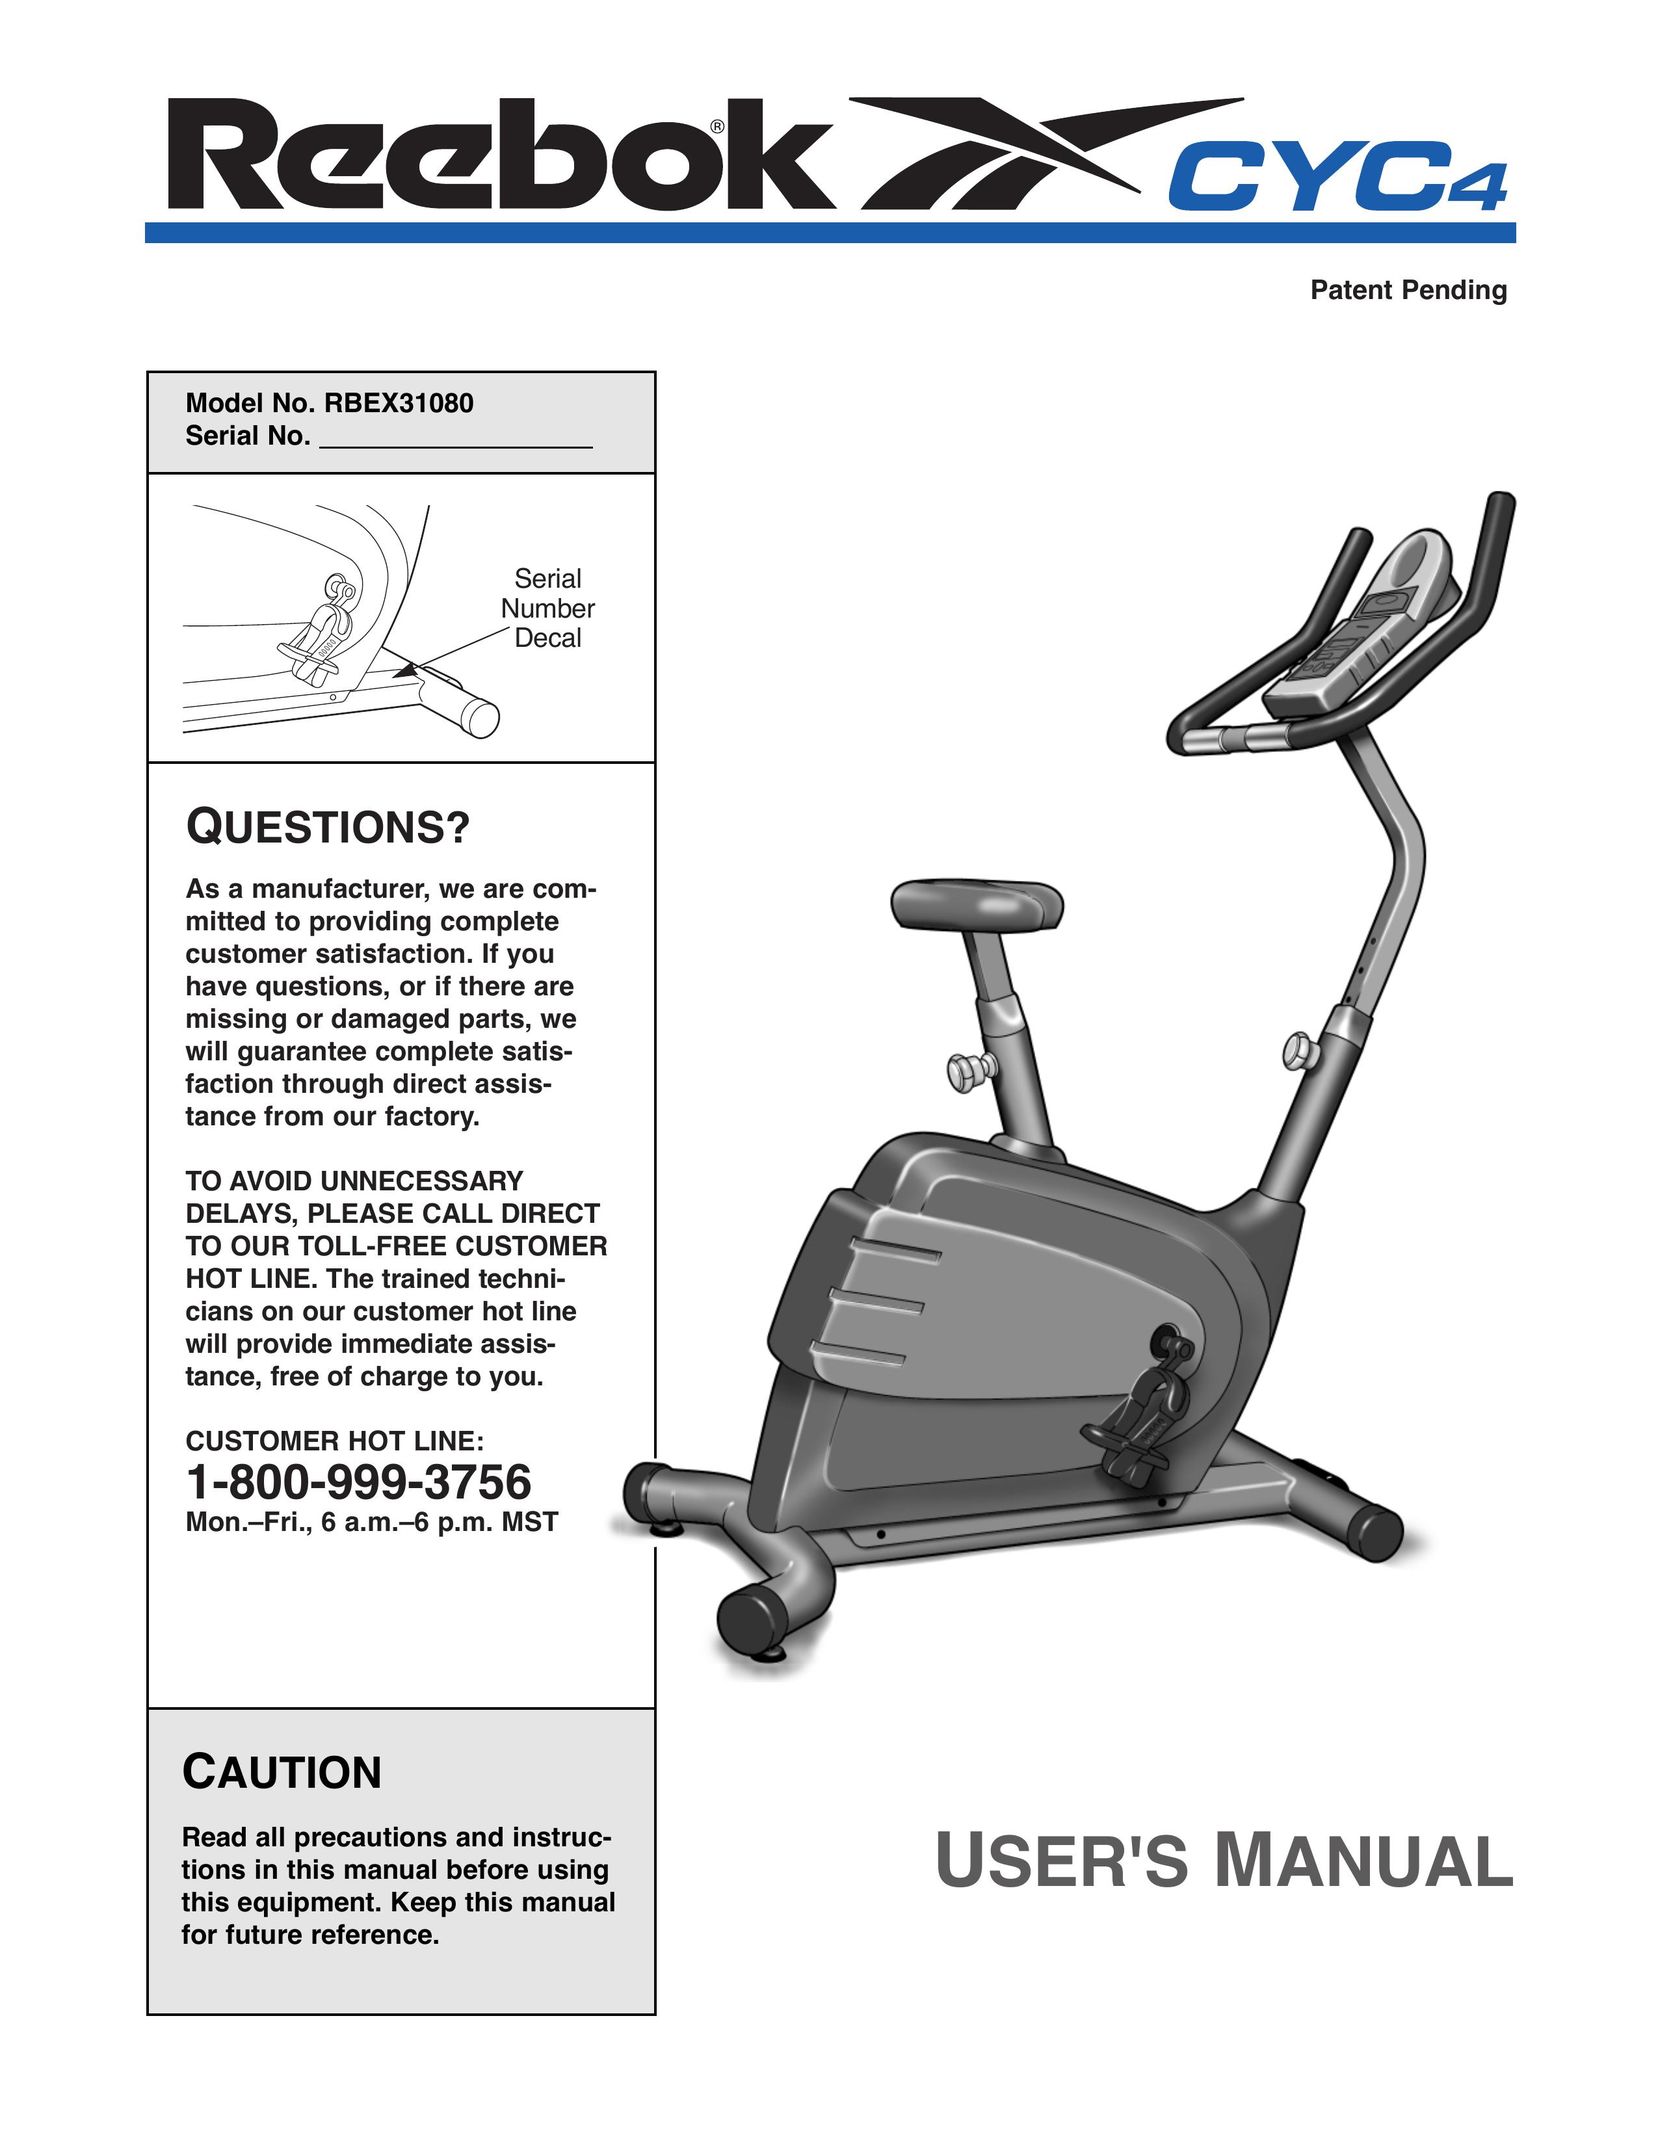 Reebok Fitness CYC4 Home Gym User Manual